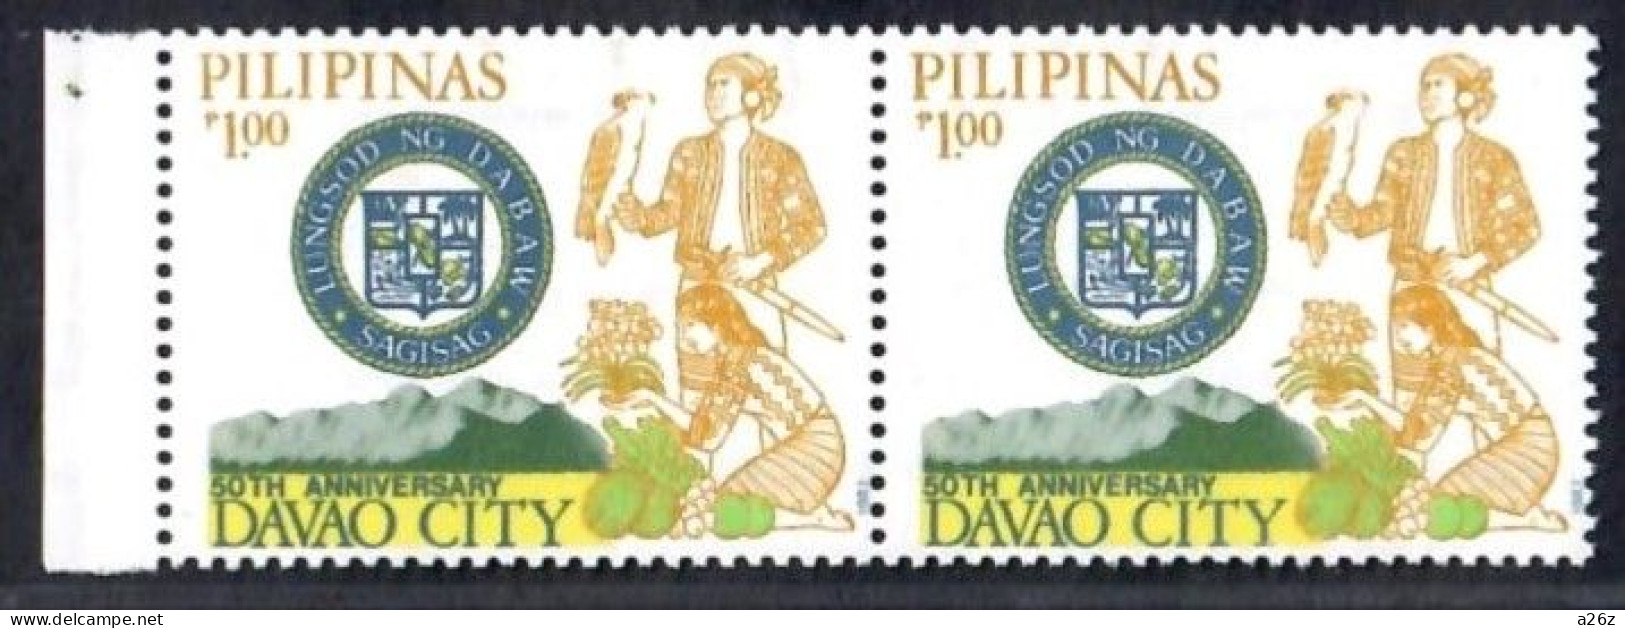 Philippines 1987 Davao City, 50th Anniv. Falconer, Woman Planting Etc. Marginal Horiz. Pair 1X 2V MNH - Filipinas